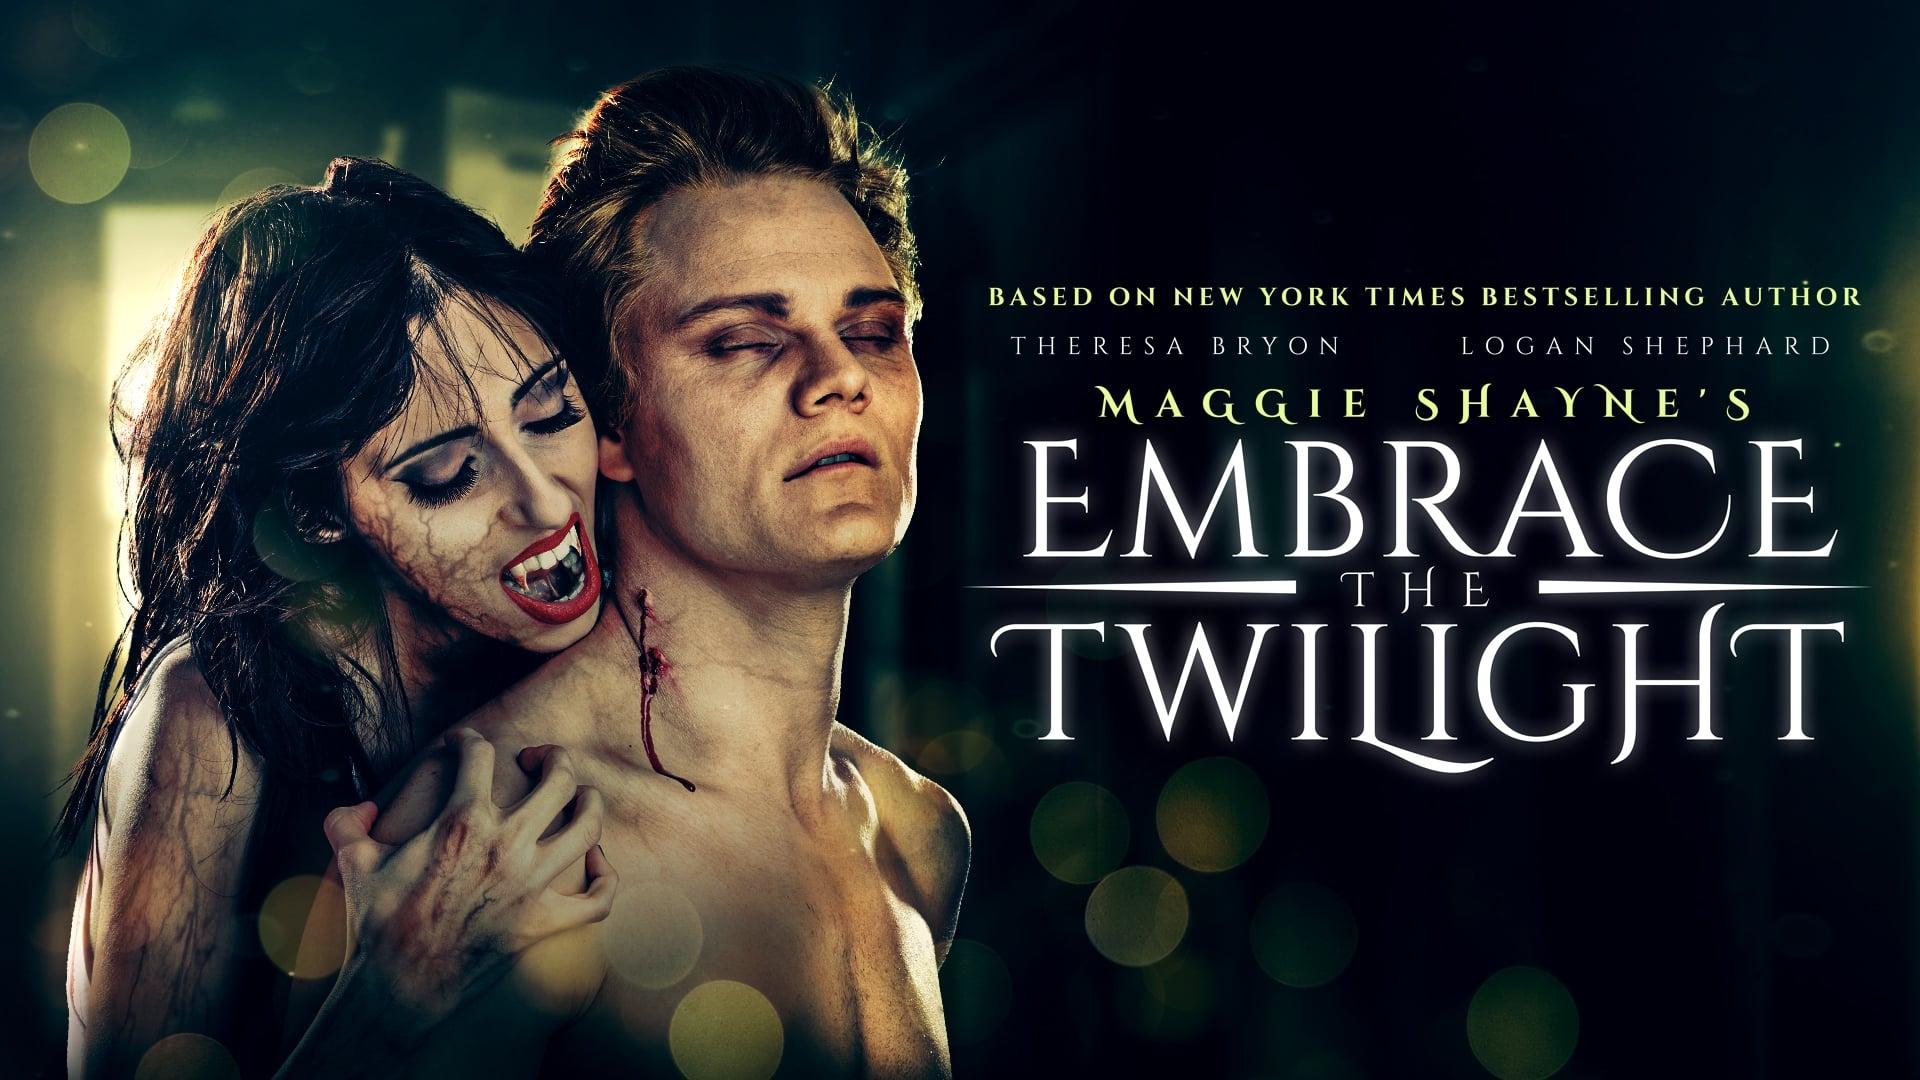 Maggie Shayne's Embrace the Twilight backdrop